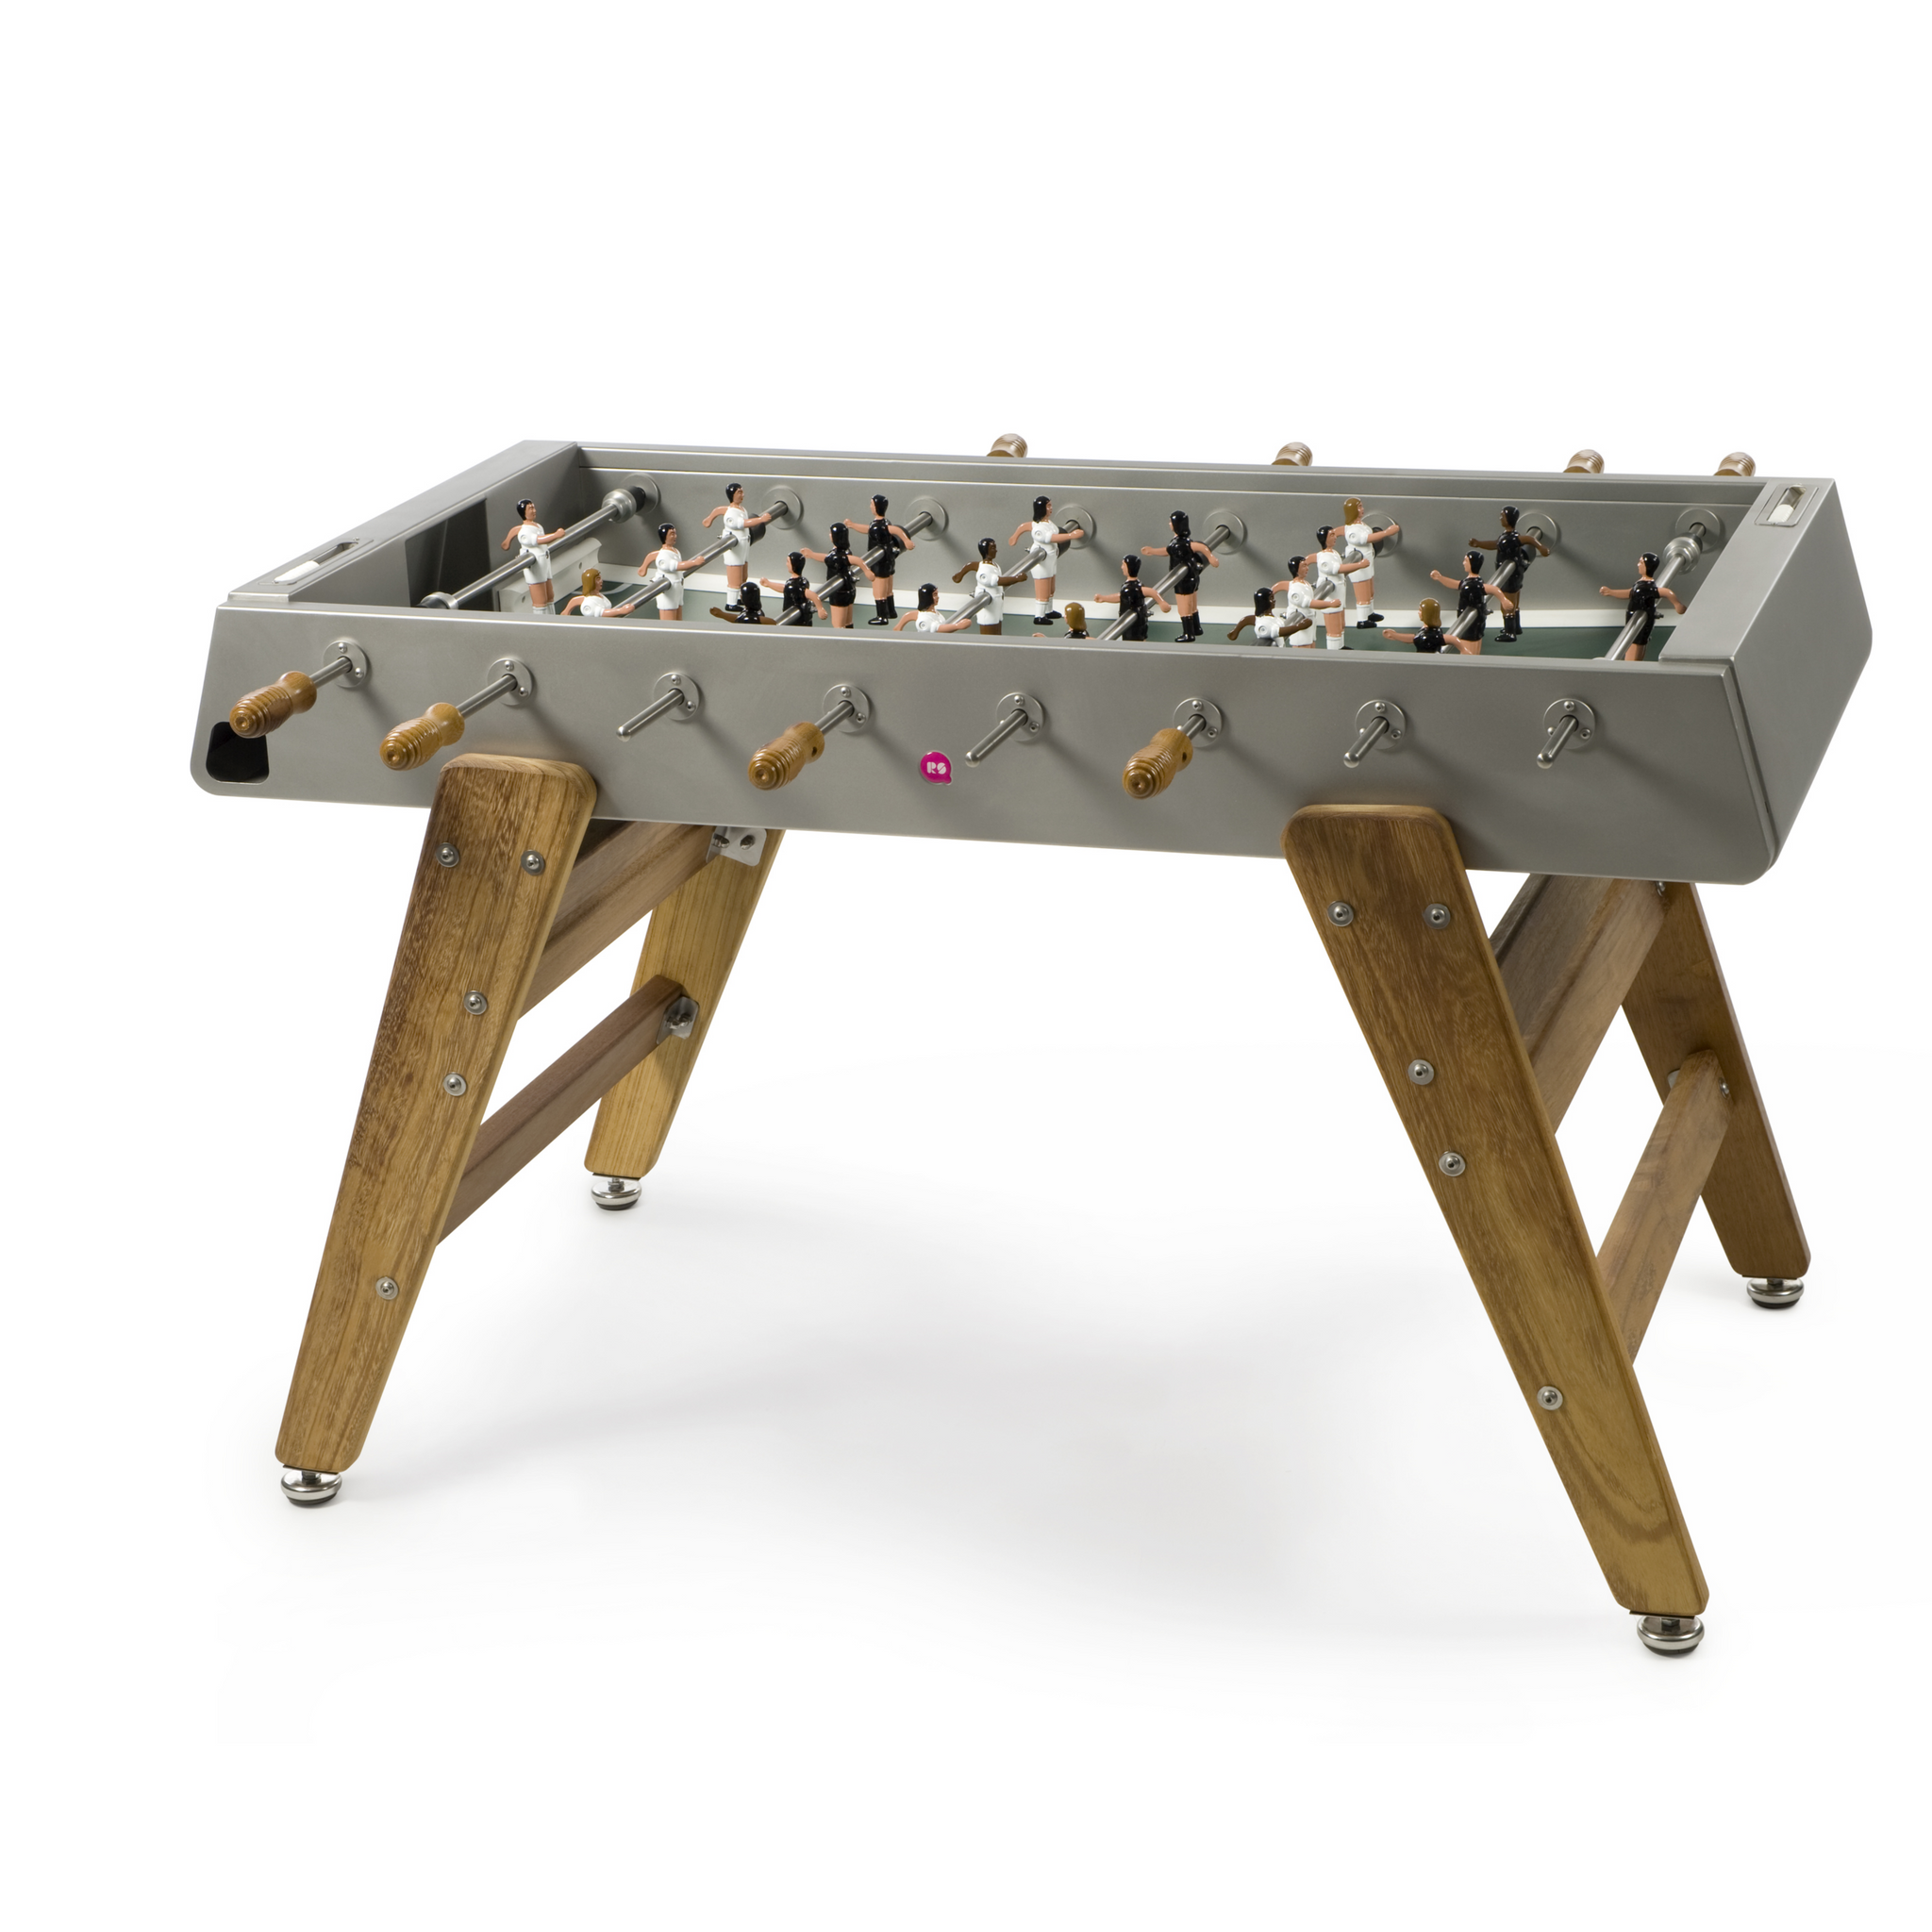 RS3 Wood Foosball Table in Stainless Steel